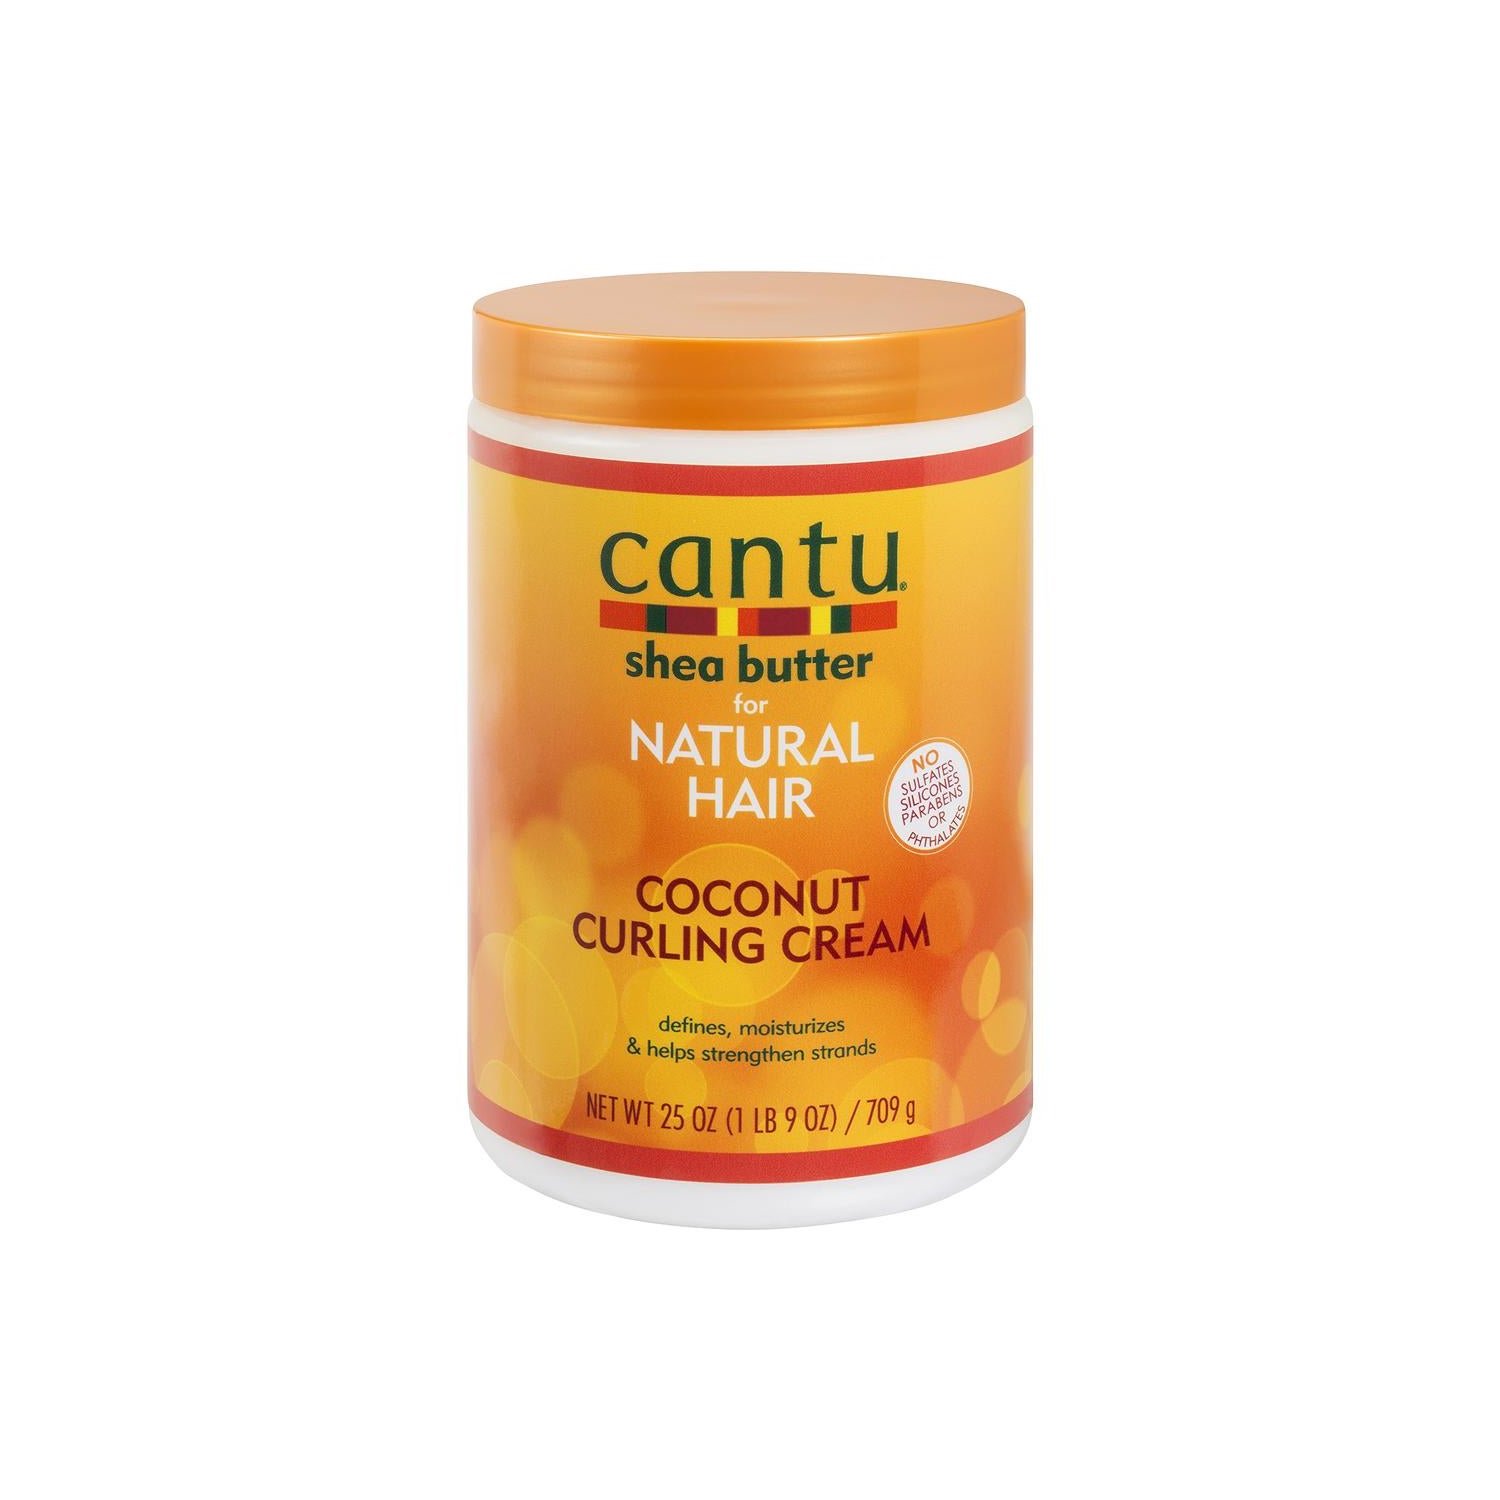 Cantu Shea Butter Natural Hair Coconut Curling Cream 709g | PromoFarma